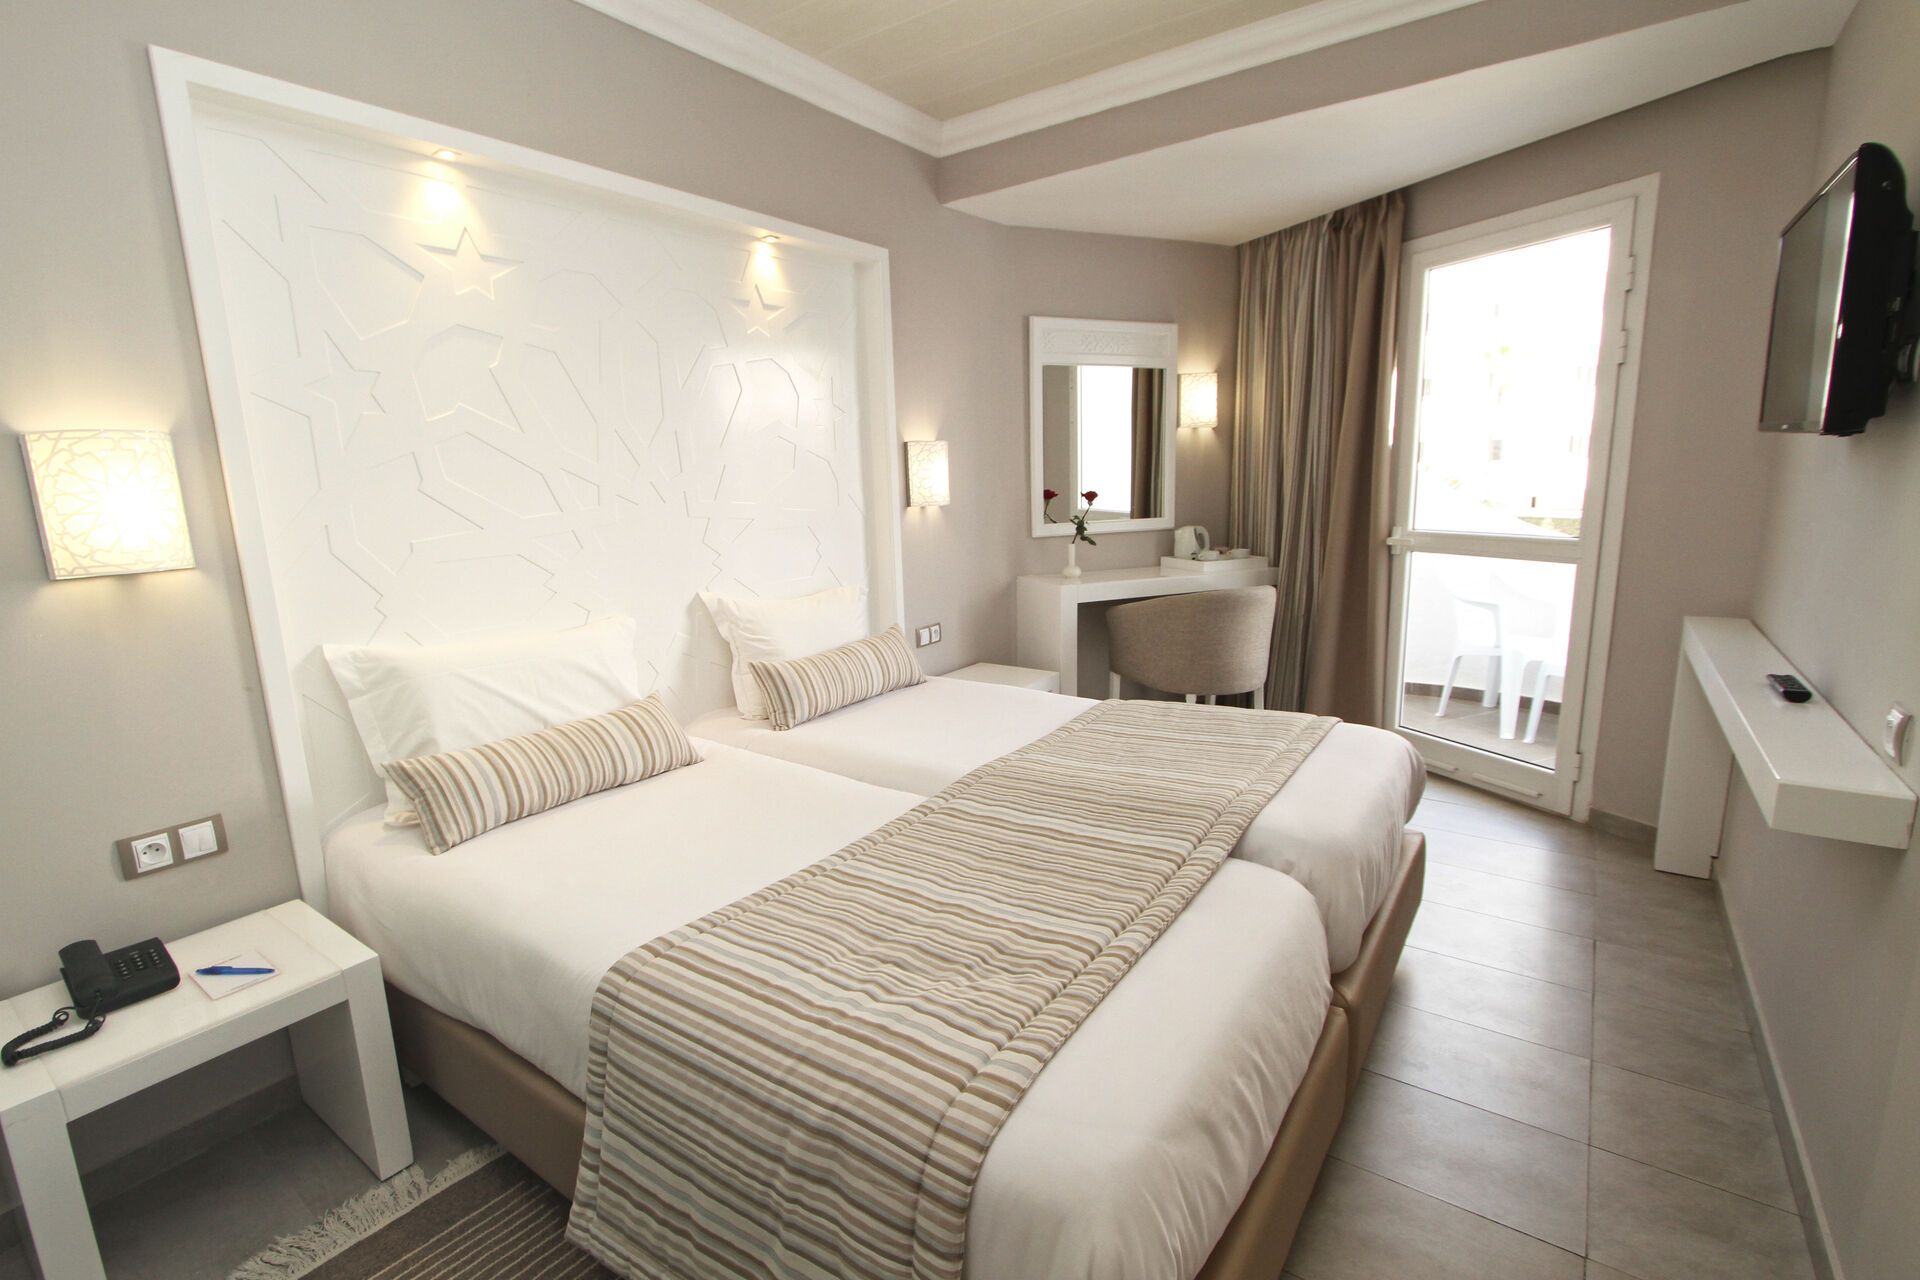 Tunisie - Monastir - Hotel Sahara Beach AquaPark Resort 3*